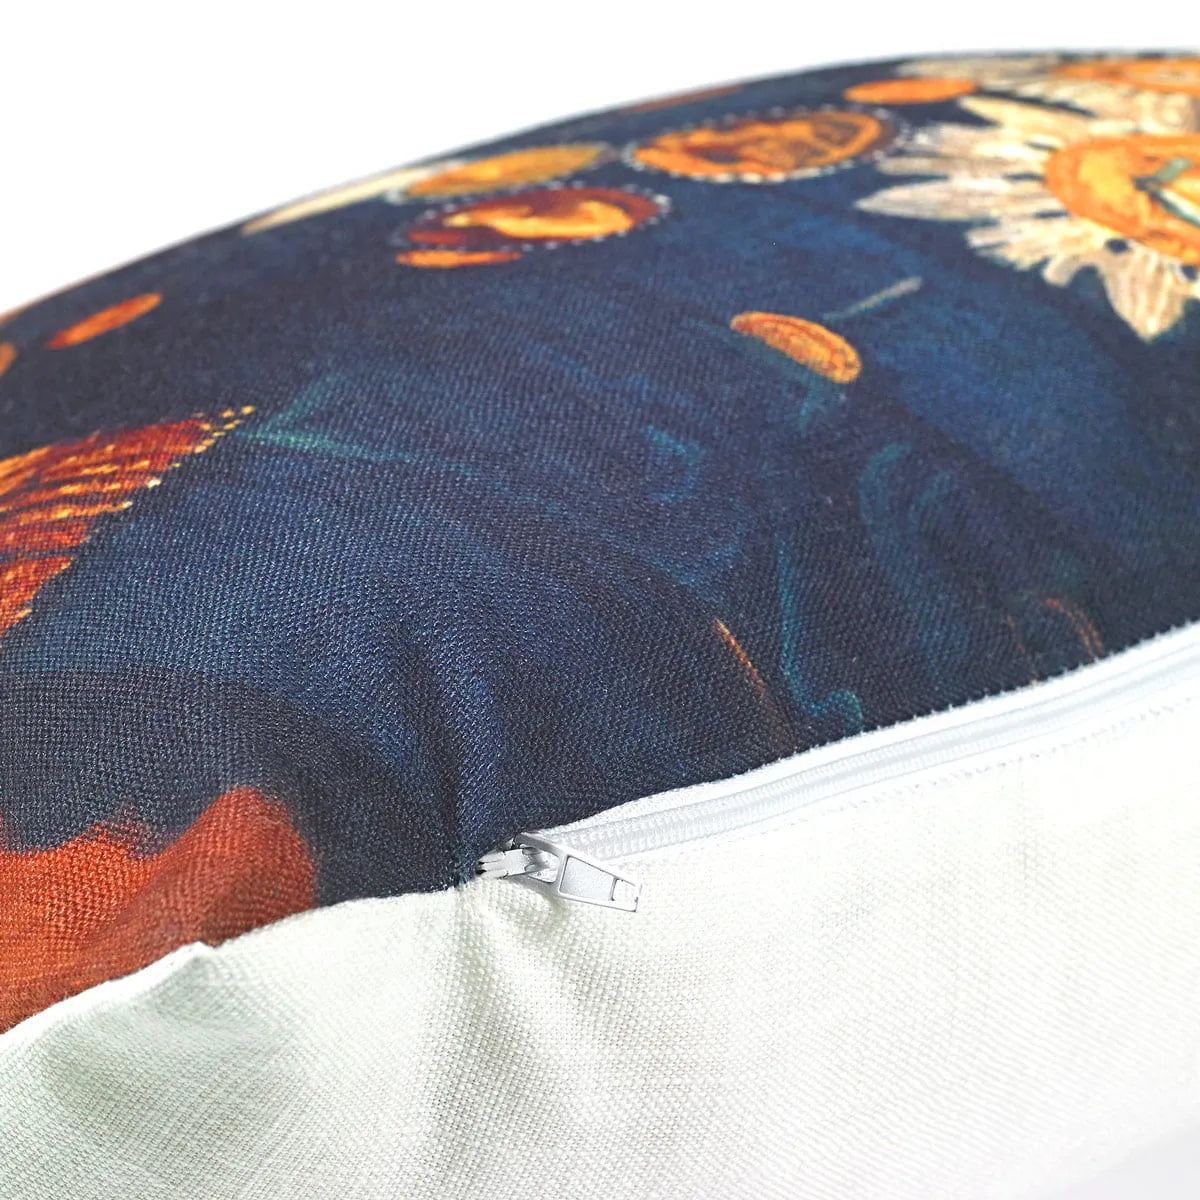 Hygieia - Gustav Klimt Cushion - Decorative Throw Pillow - Throw Pillows - Aesthetic Art